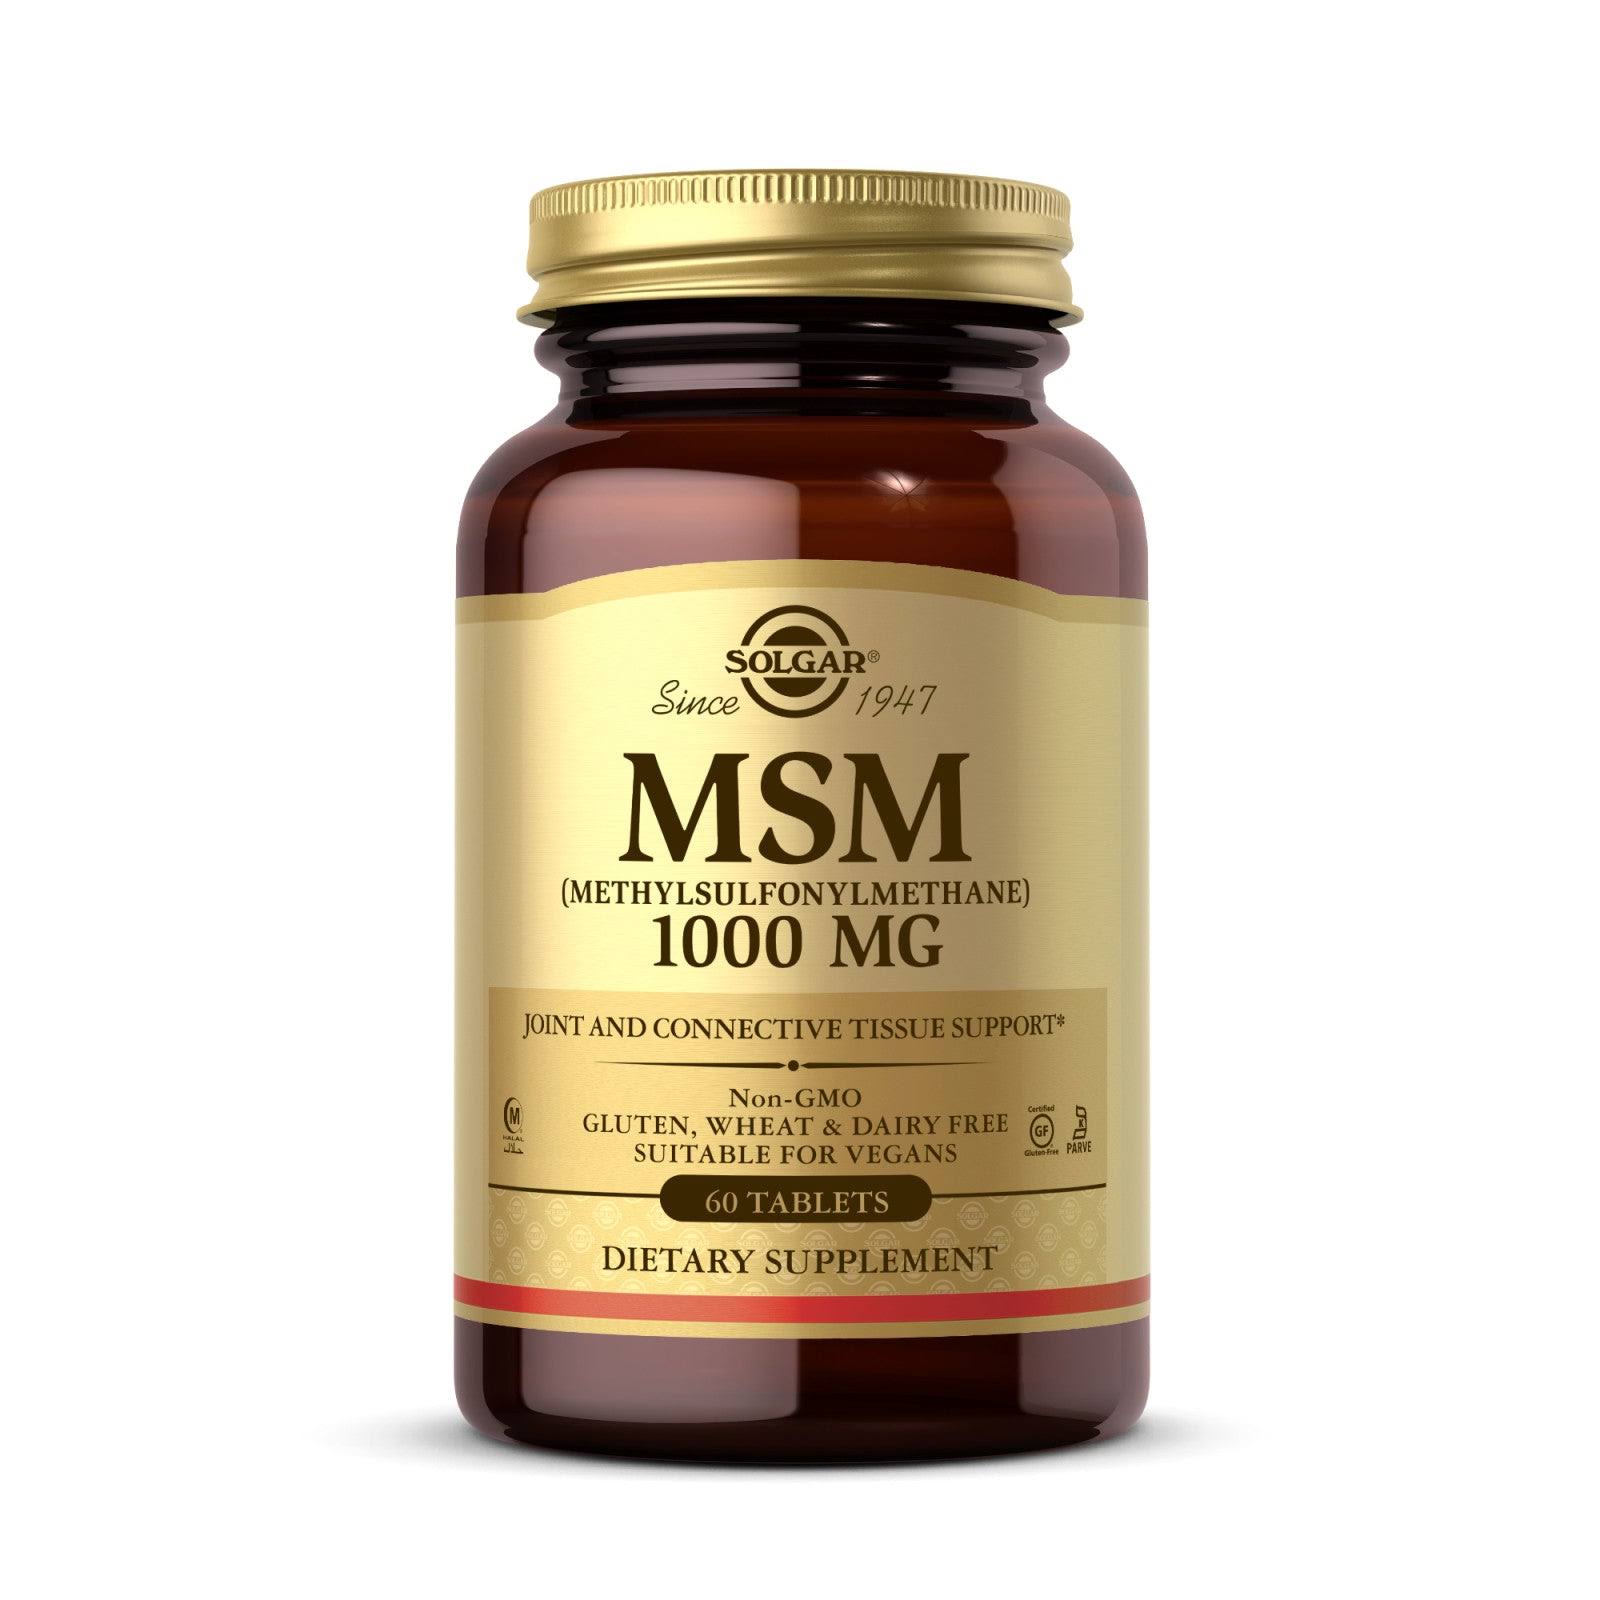 Solgar MSM Dietary Supplement